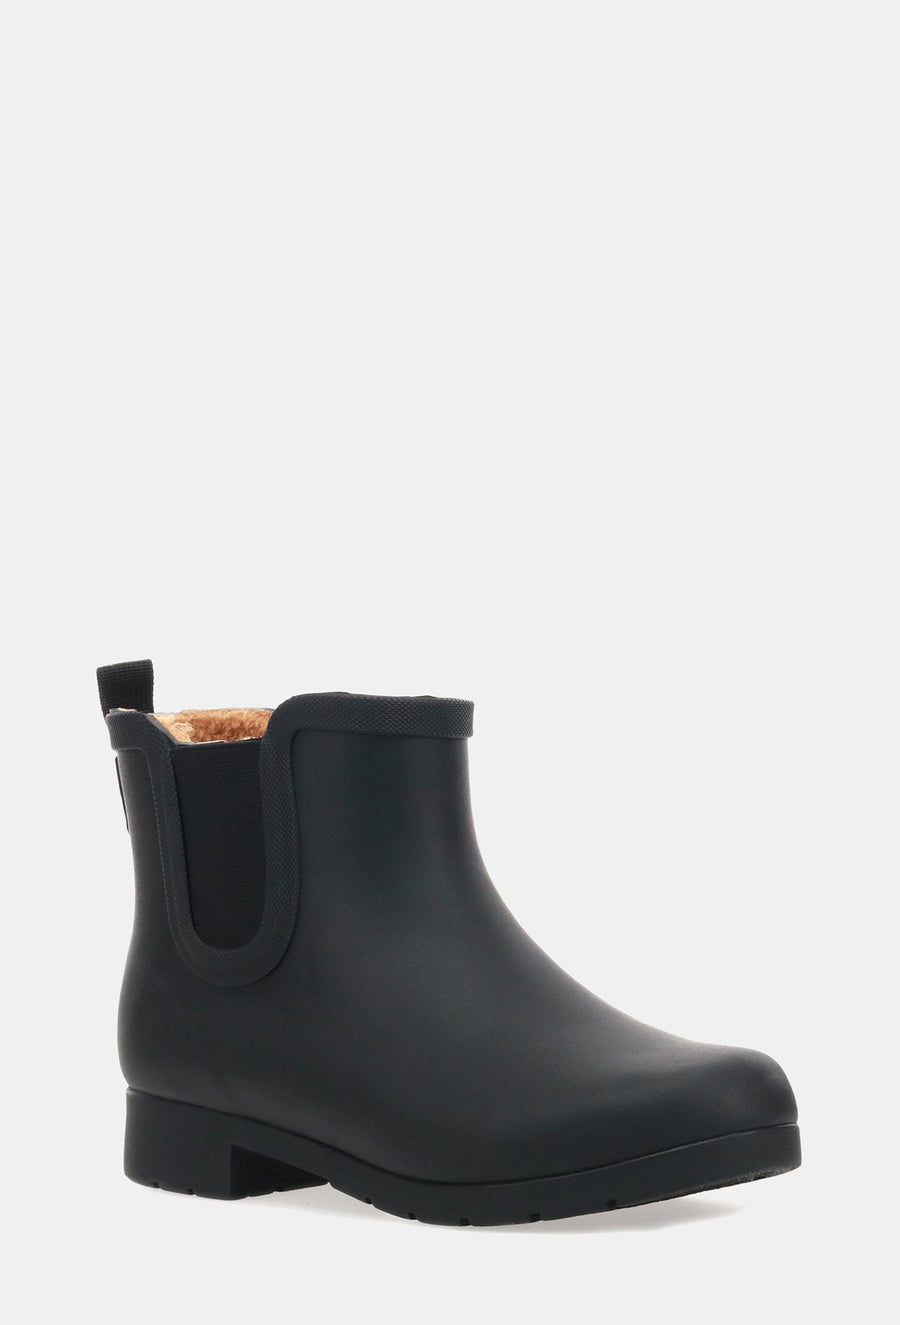 Chooka Rain Boots | Delridge Chelsea Rain Boot - Black